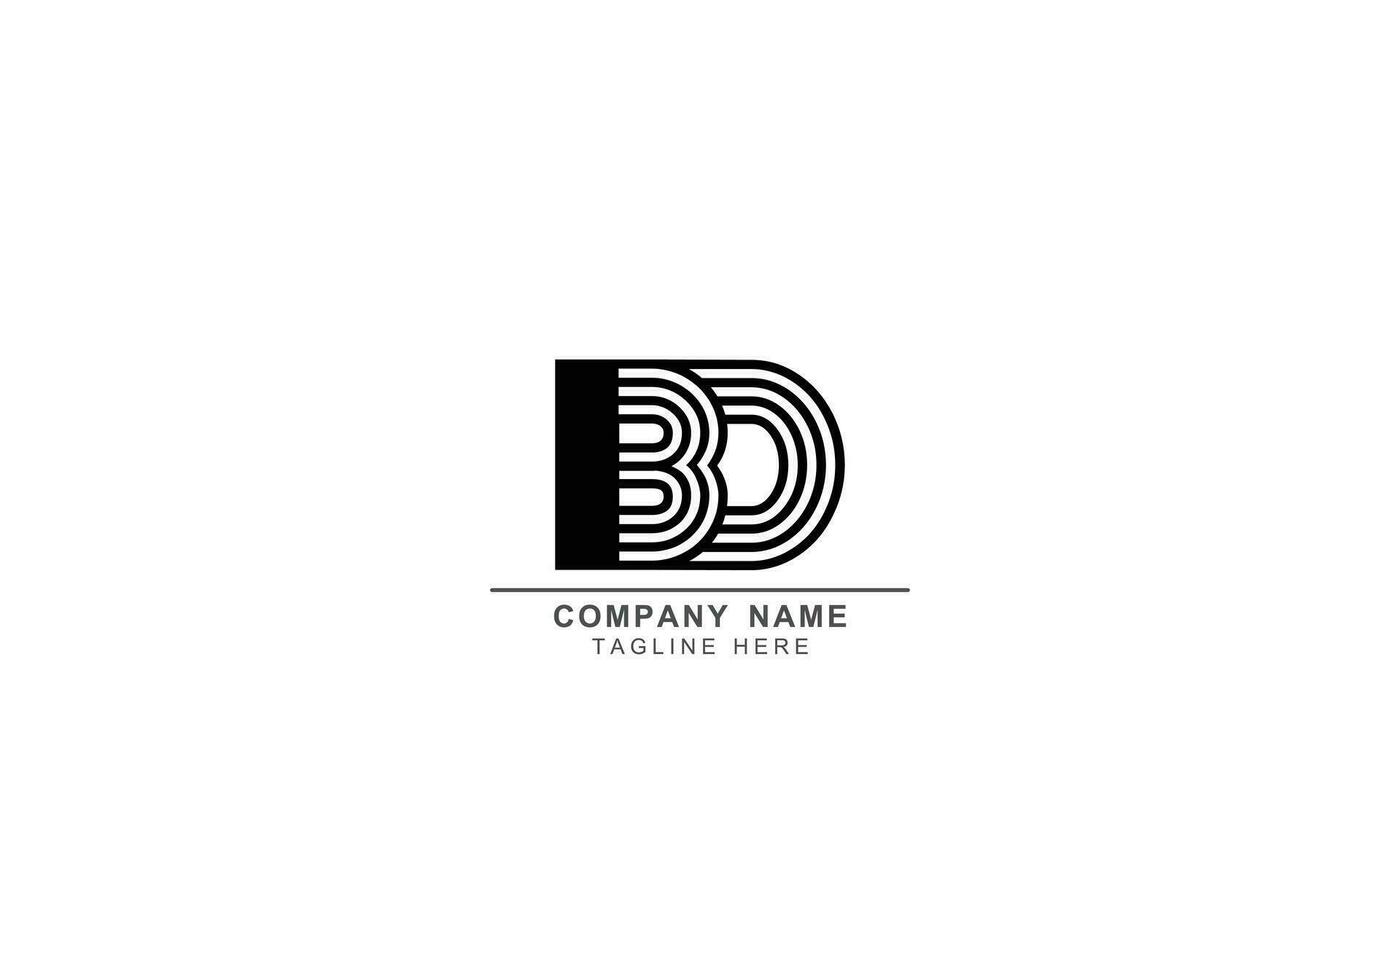 BD or DB minimal logo. vector